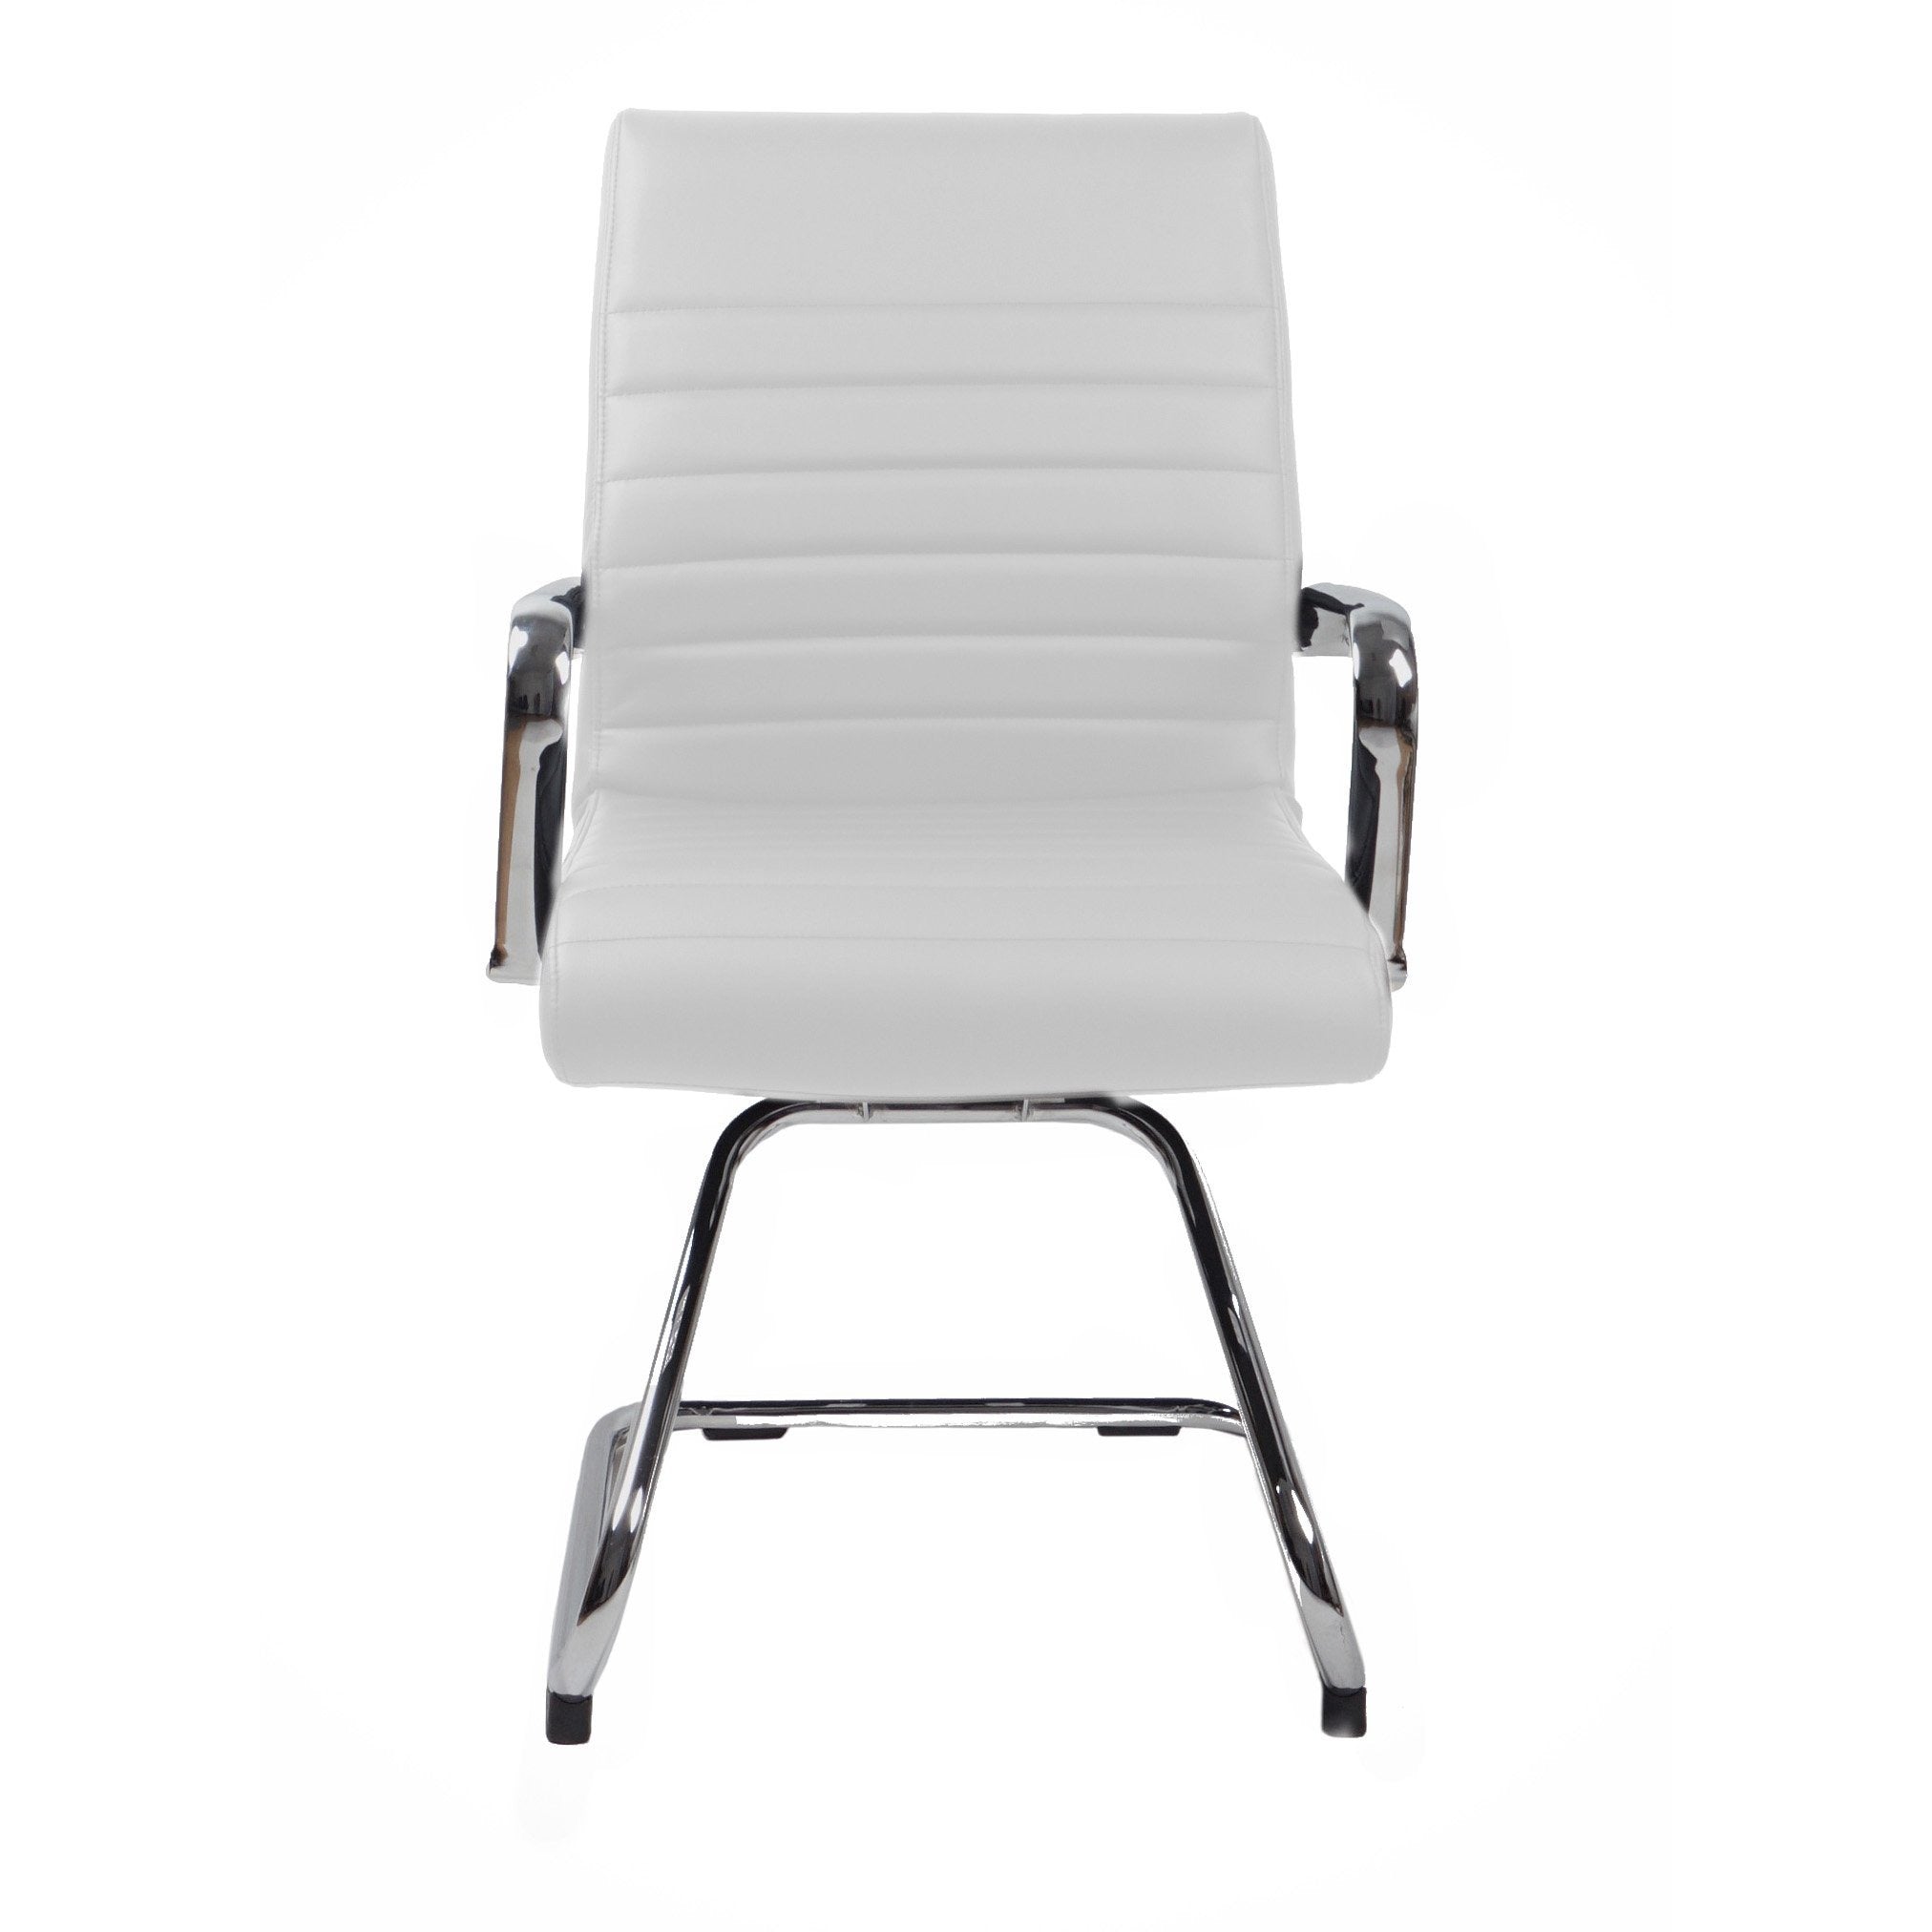 RealBiz II Modern Comfort Series Visitor LeatherPro Chair, Pure White